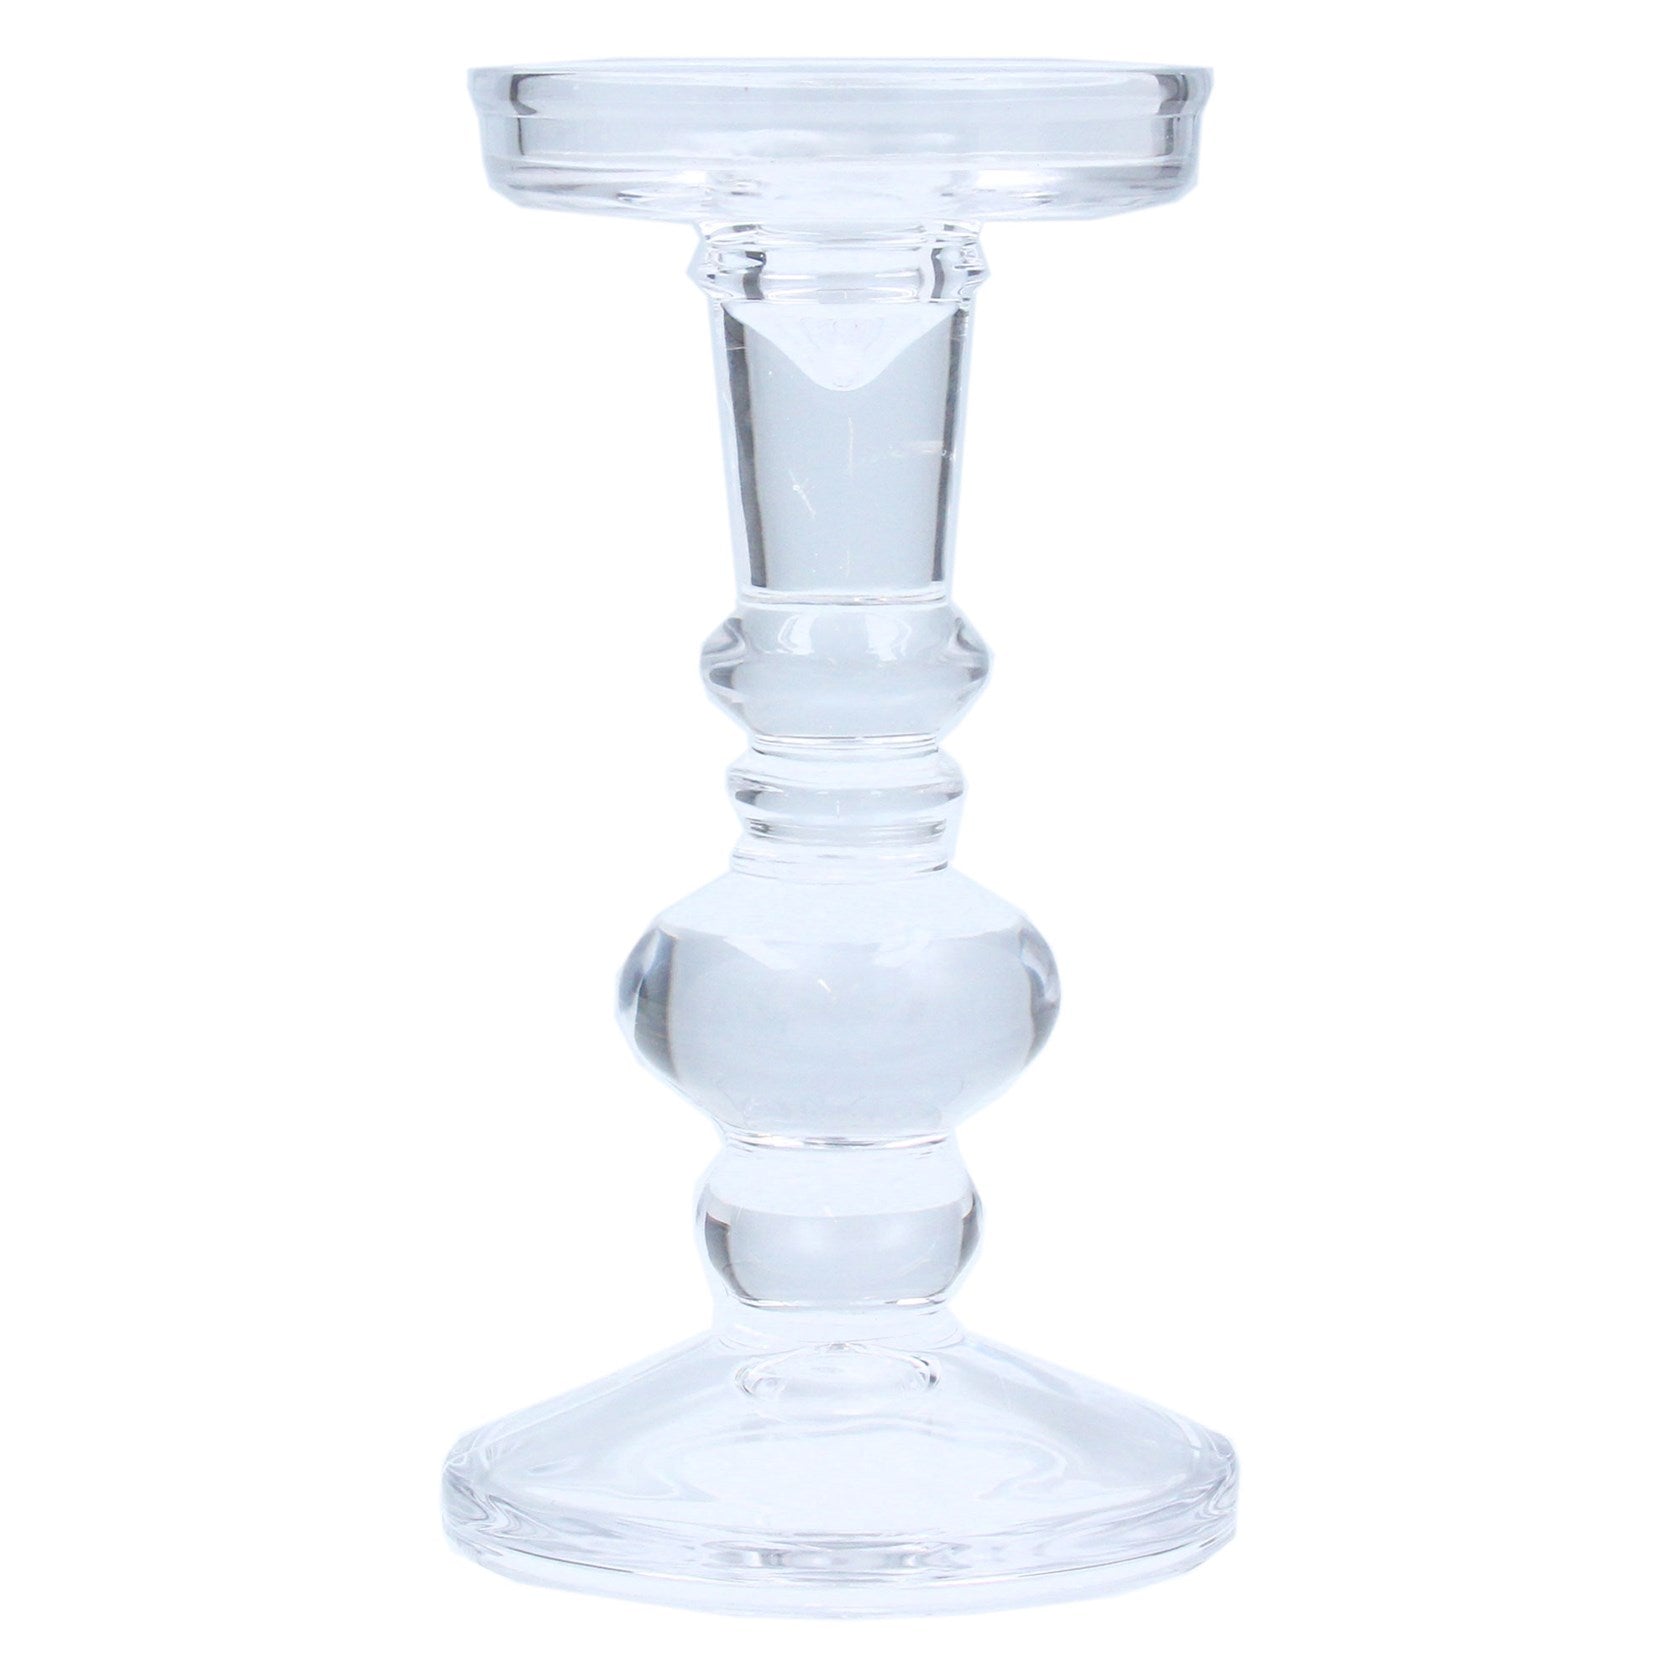 Tall clear glass ball candlestick